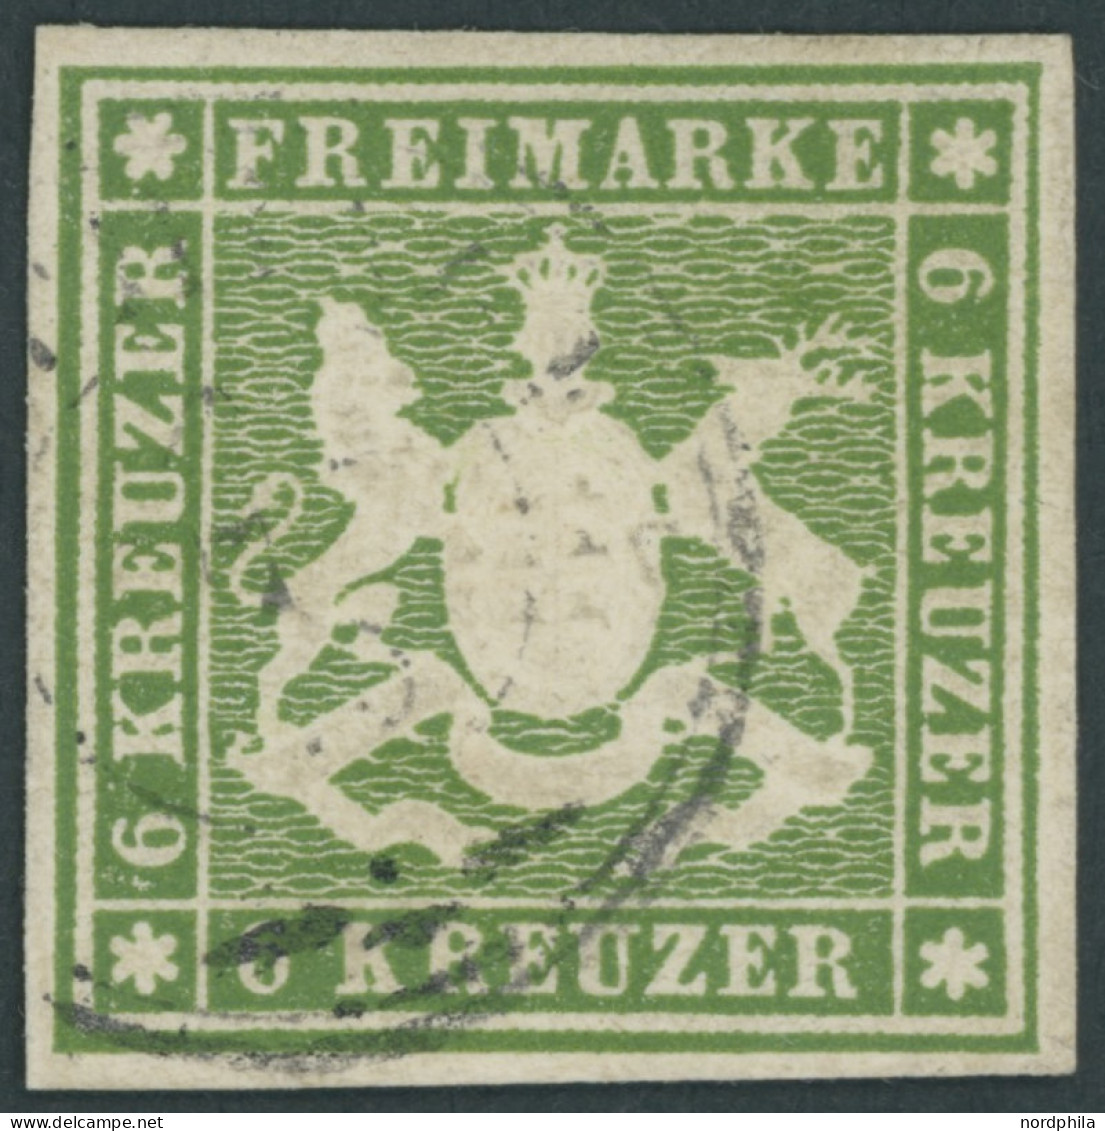 WÜRTTEMBERG 13b O, 1859, 6 Kr. Dunkelgrün, Pracht, Gepr. Thoma, Mi. 350.- - Gebraucht